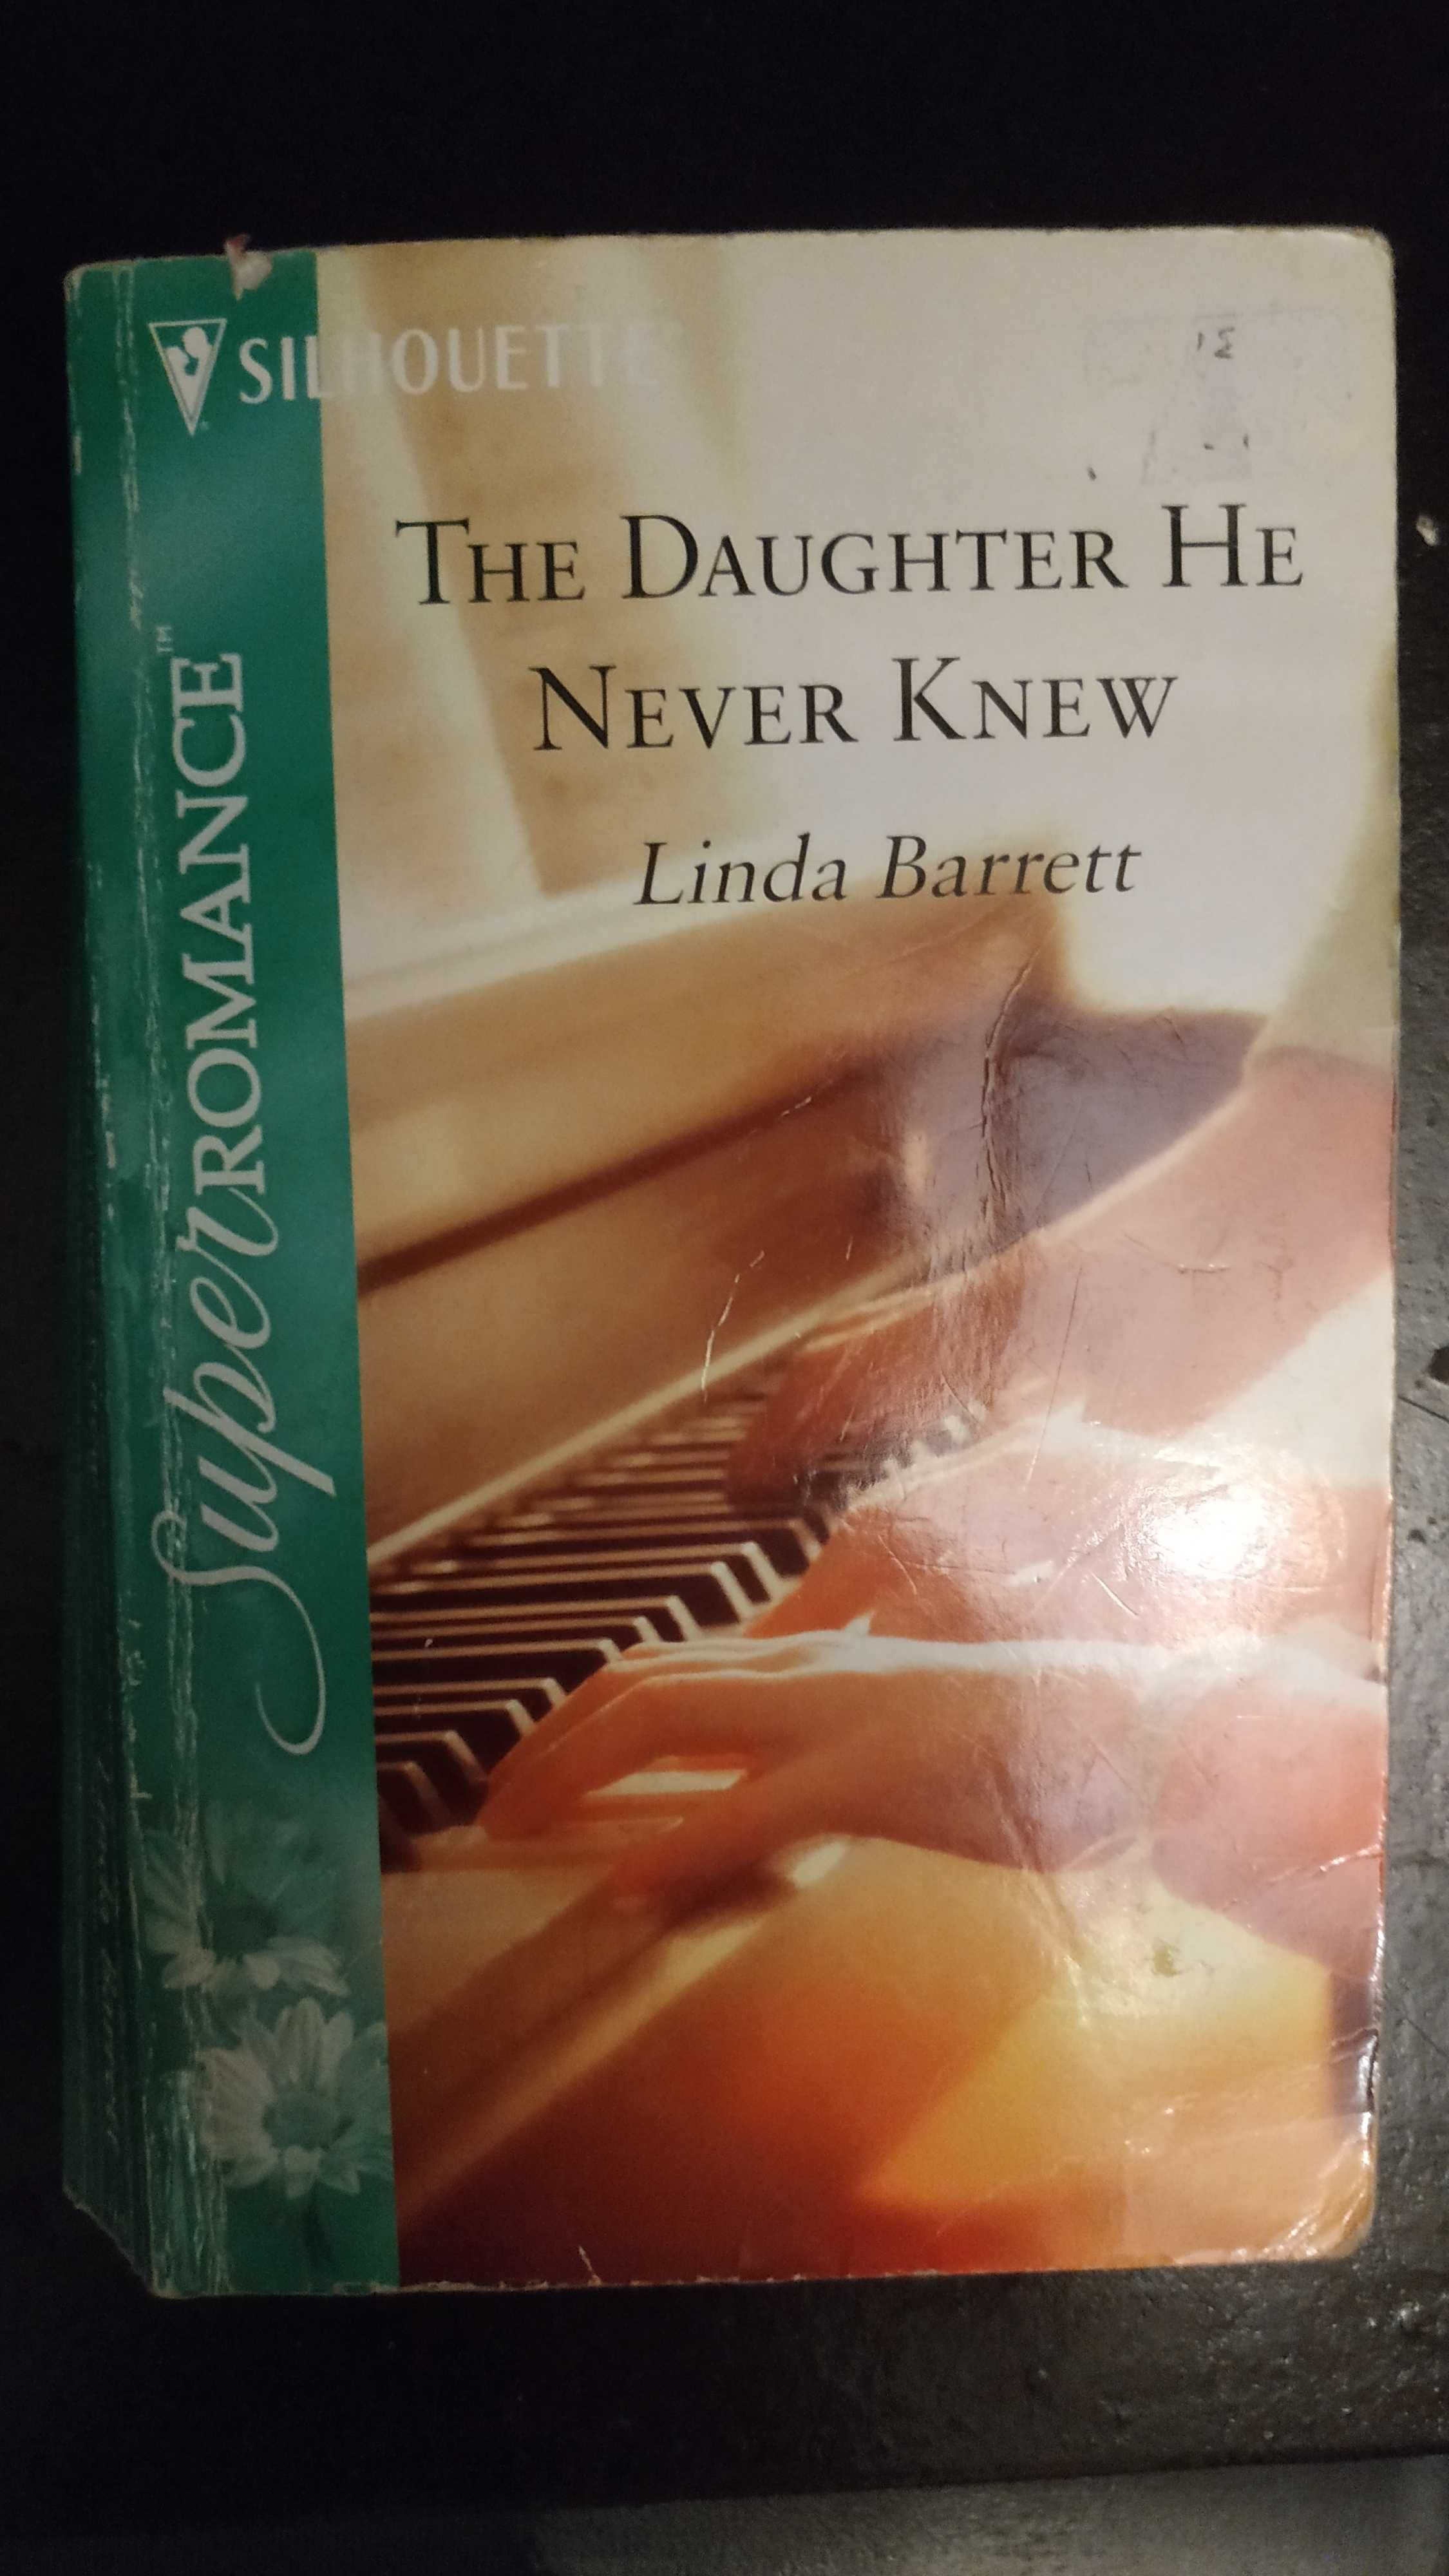 Książka po angielsku - Linda Barrett "The daughter he never knew"